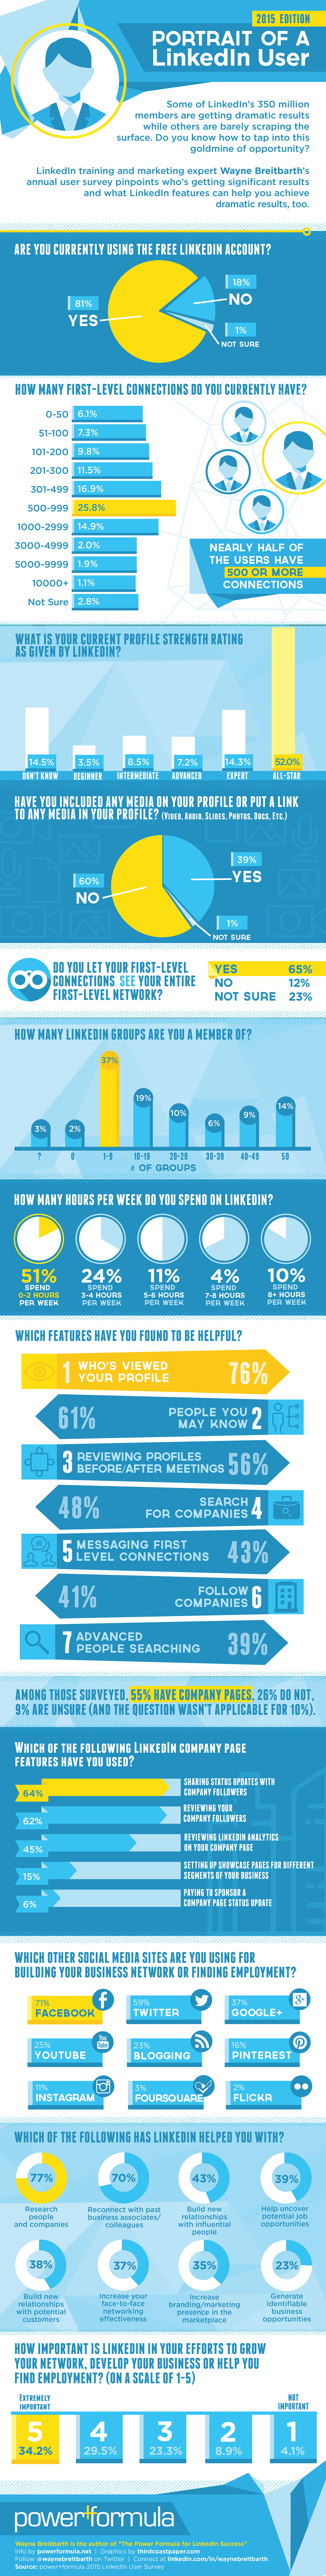 Linkedin Infographic 2015